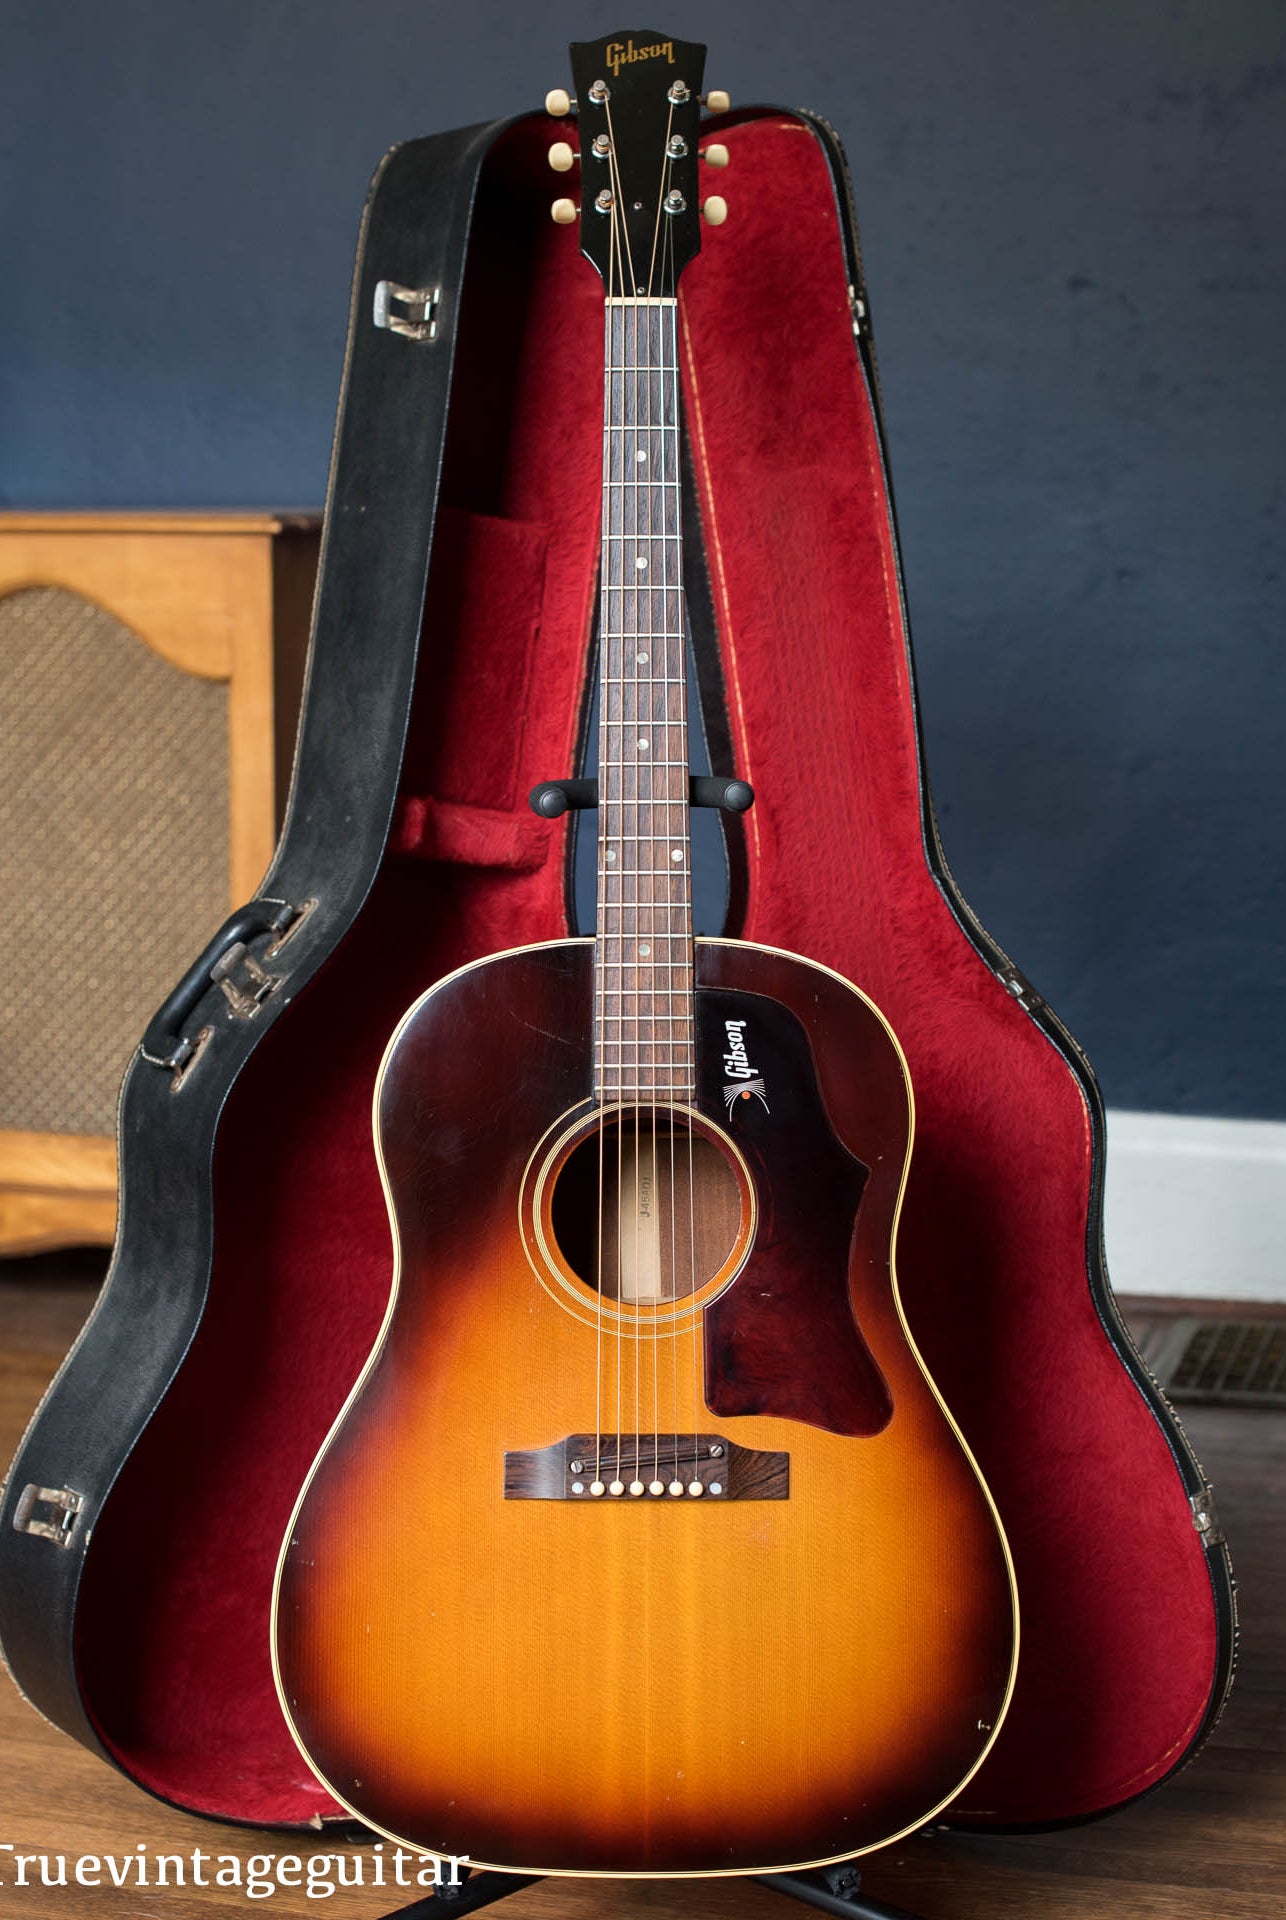 Vintage 1968 Gibson J-45 acoustic guitar